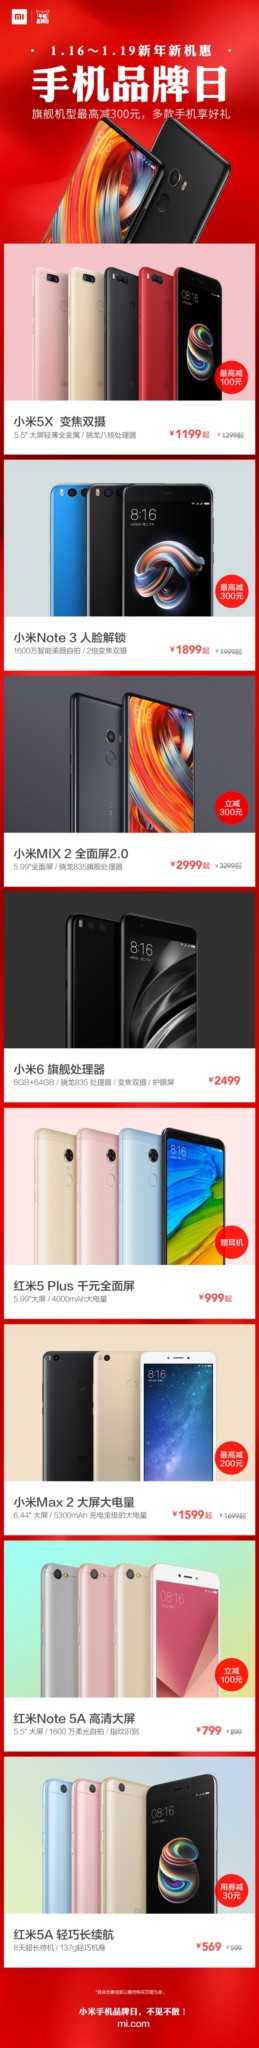 Xiaomi Discount Promo